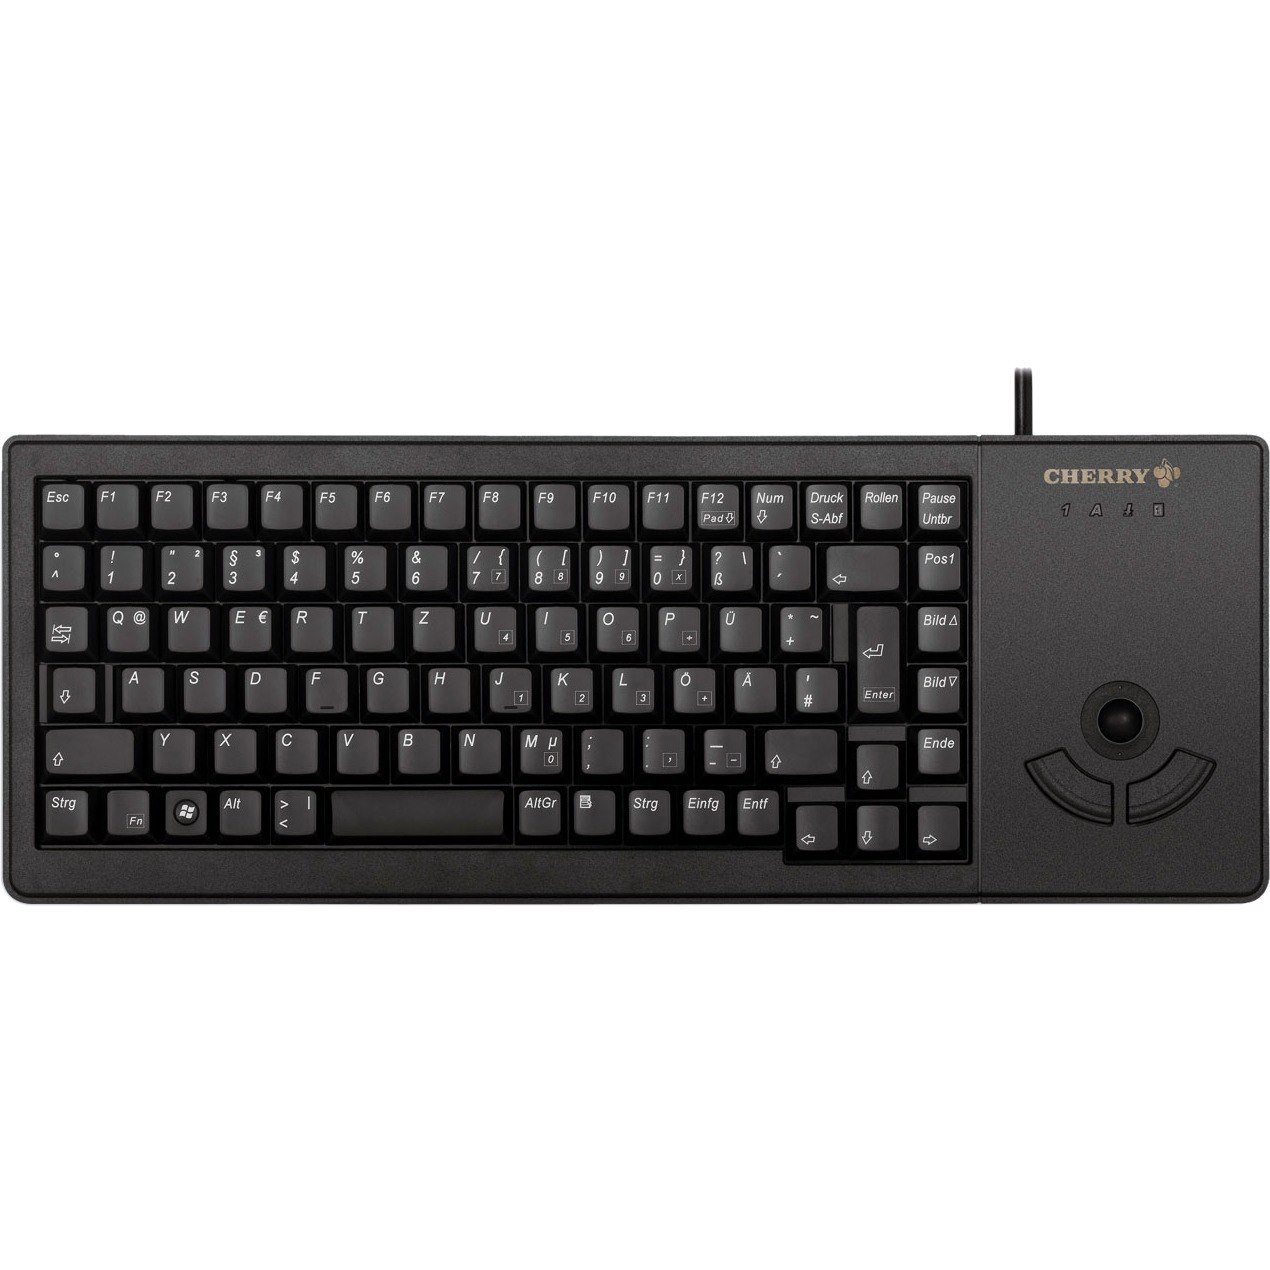 CHERRY ML 5400 XS Wired Keyboard